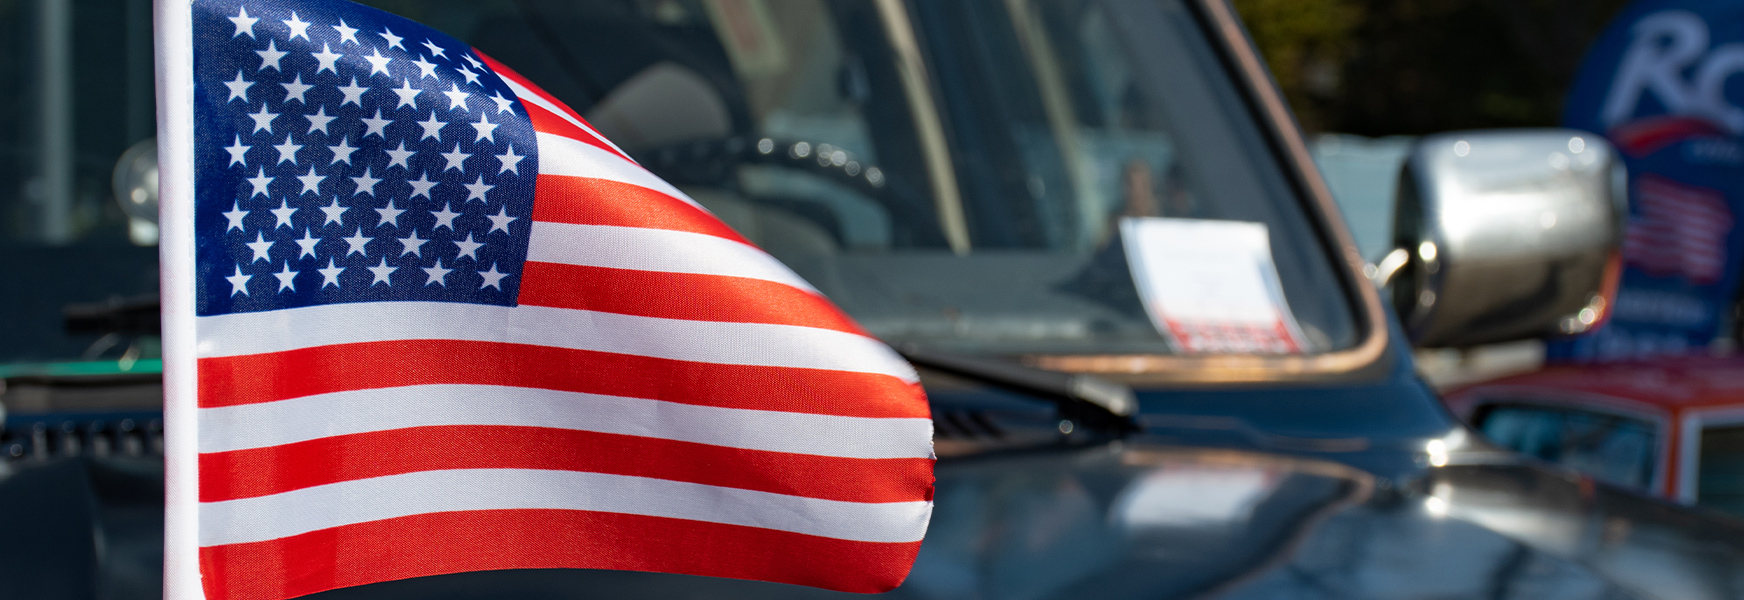 American flag on hood of pickup truck